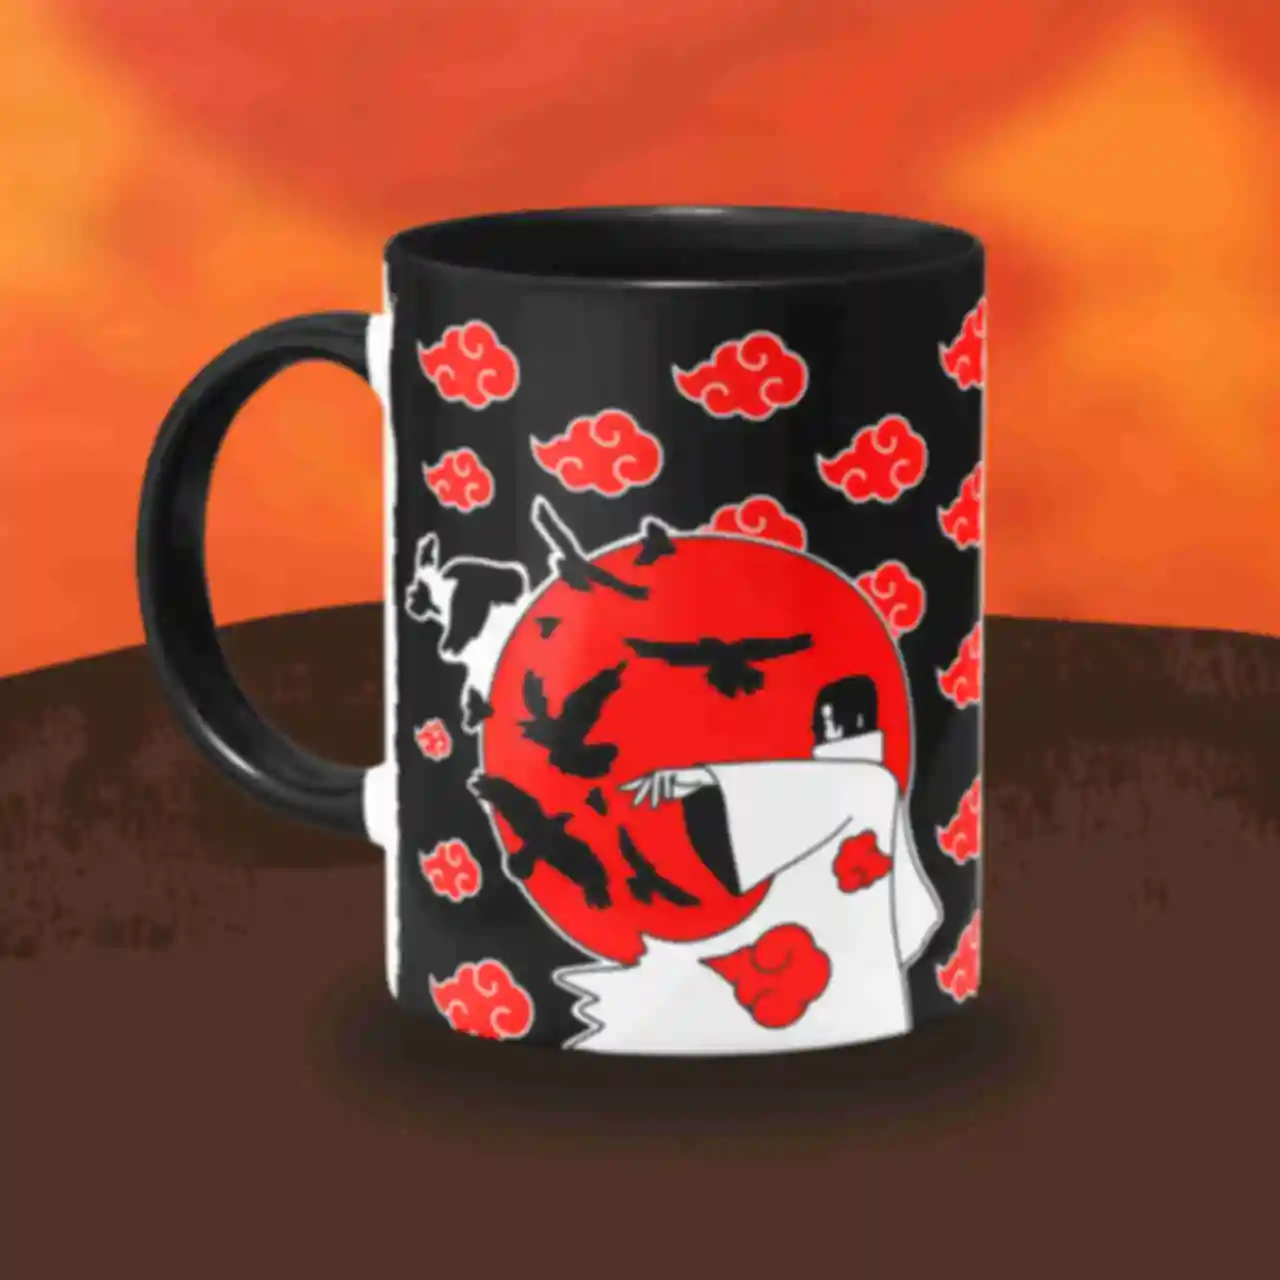 Чашка ⦁ Итачи Учиха ⦁ Кружка с облаками Акацуки ⦁ Сувениры и посуда Наруто ⦁ Подарки в стиле аниме Naruto